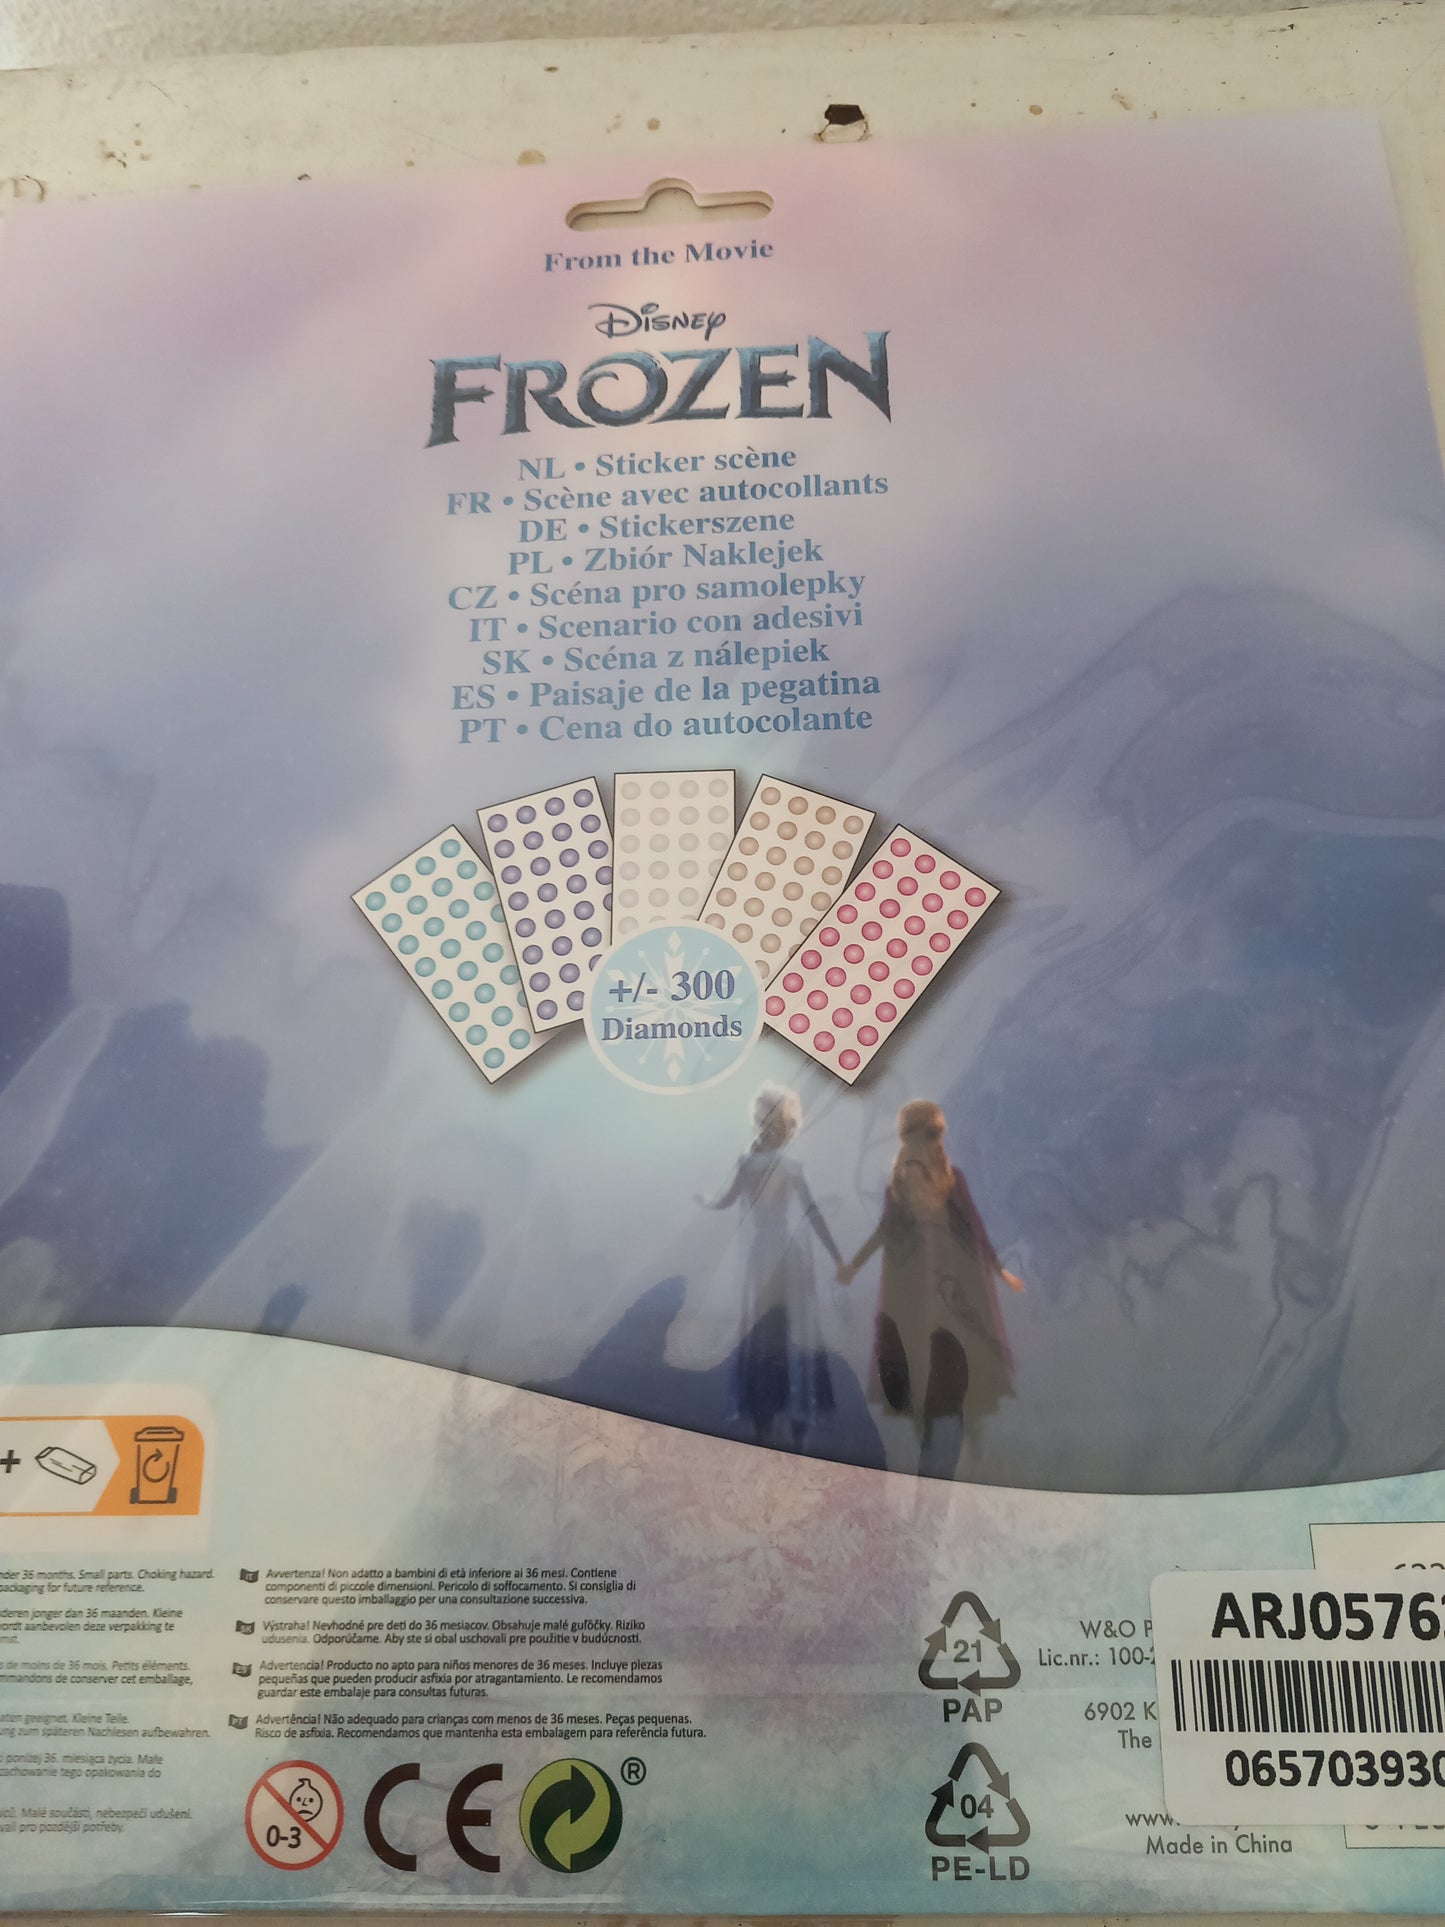 Stickers scene with diamond, frozen